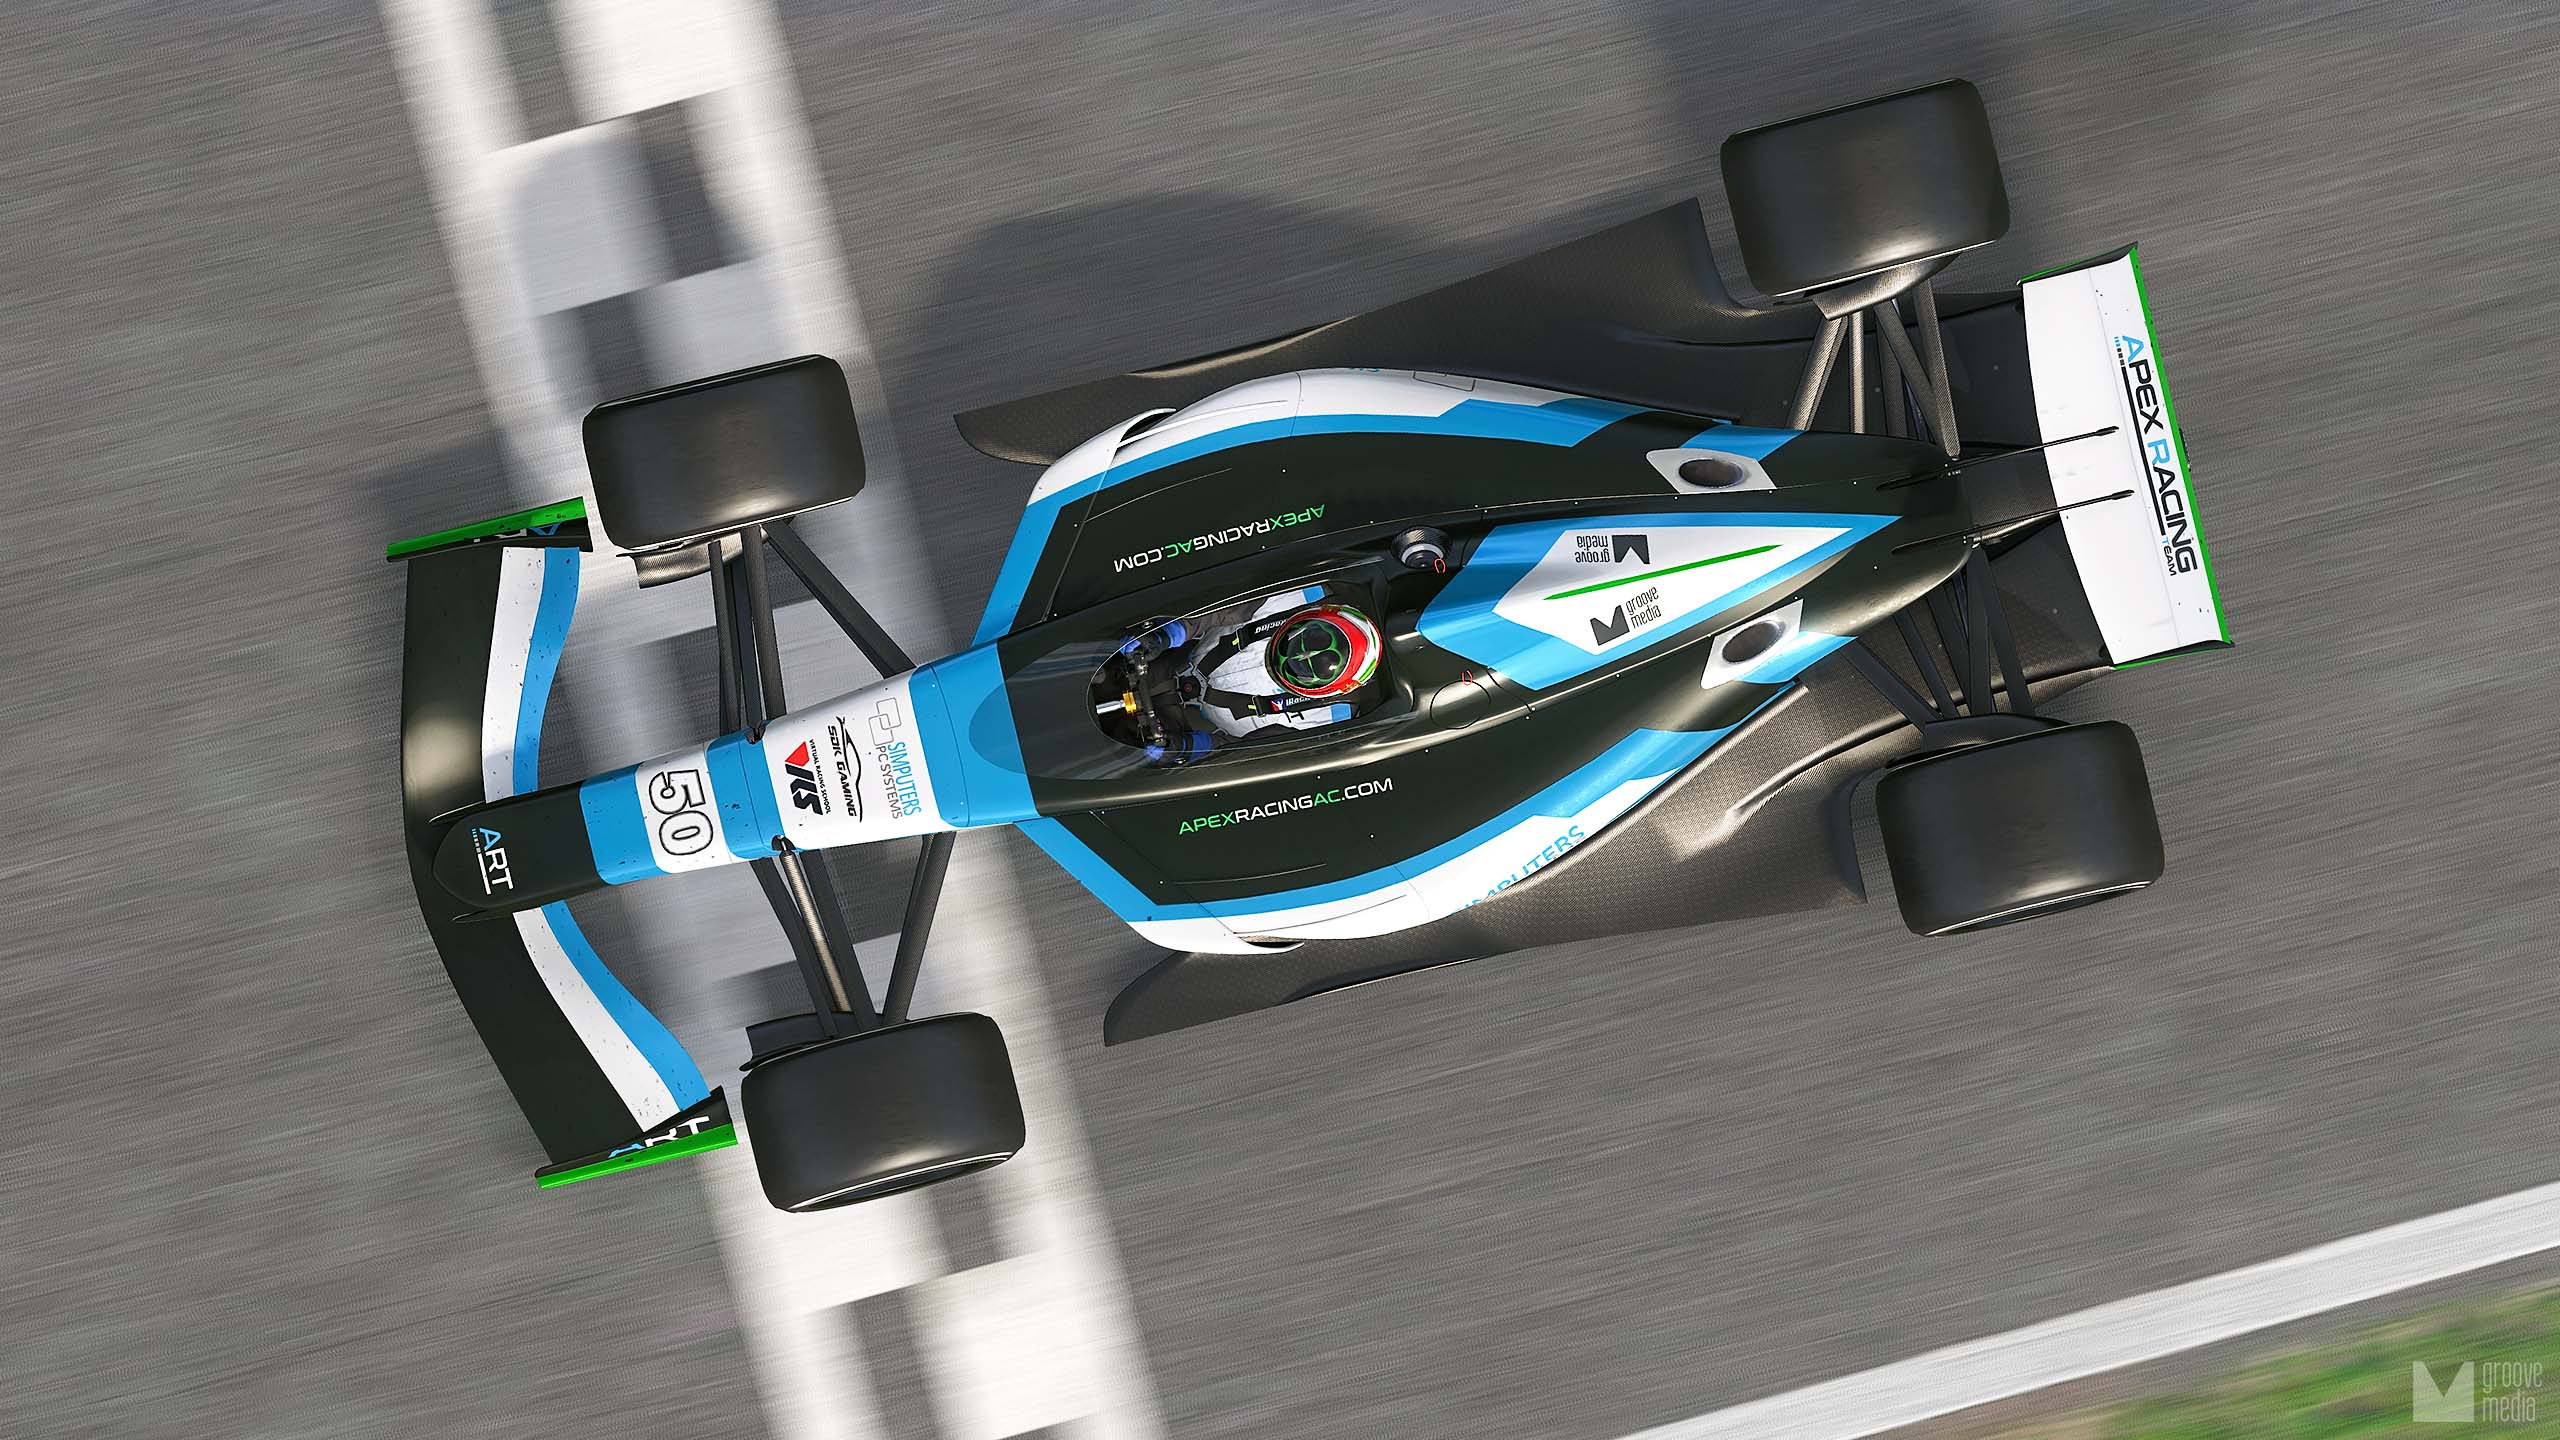 Peter Berryman – The iRacing Force Dynamics Dallara iR01 Grand Prix World Champion